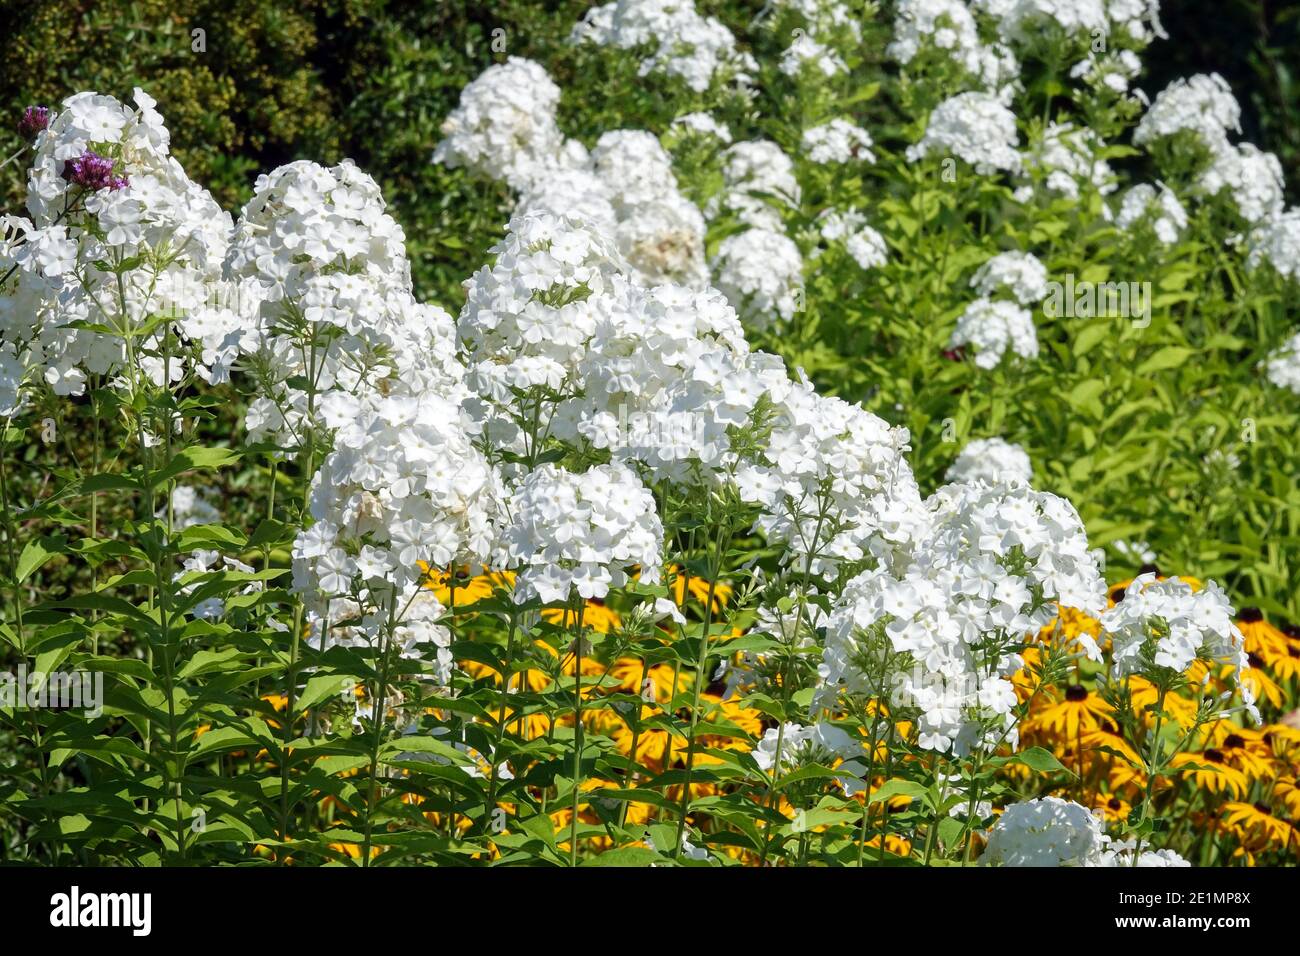 Herbaceous perennials bed White Phlox Mount Fujiyama Rudbeckias Stock Photo